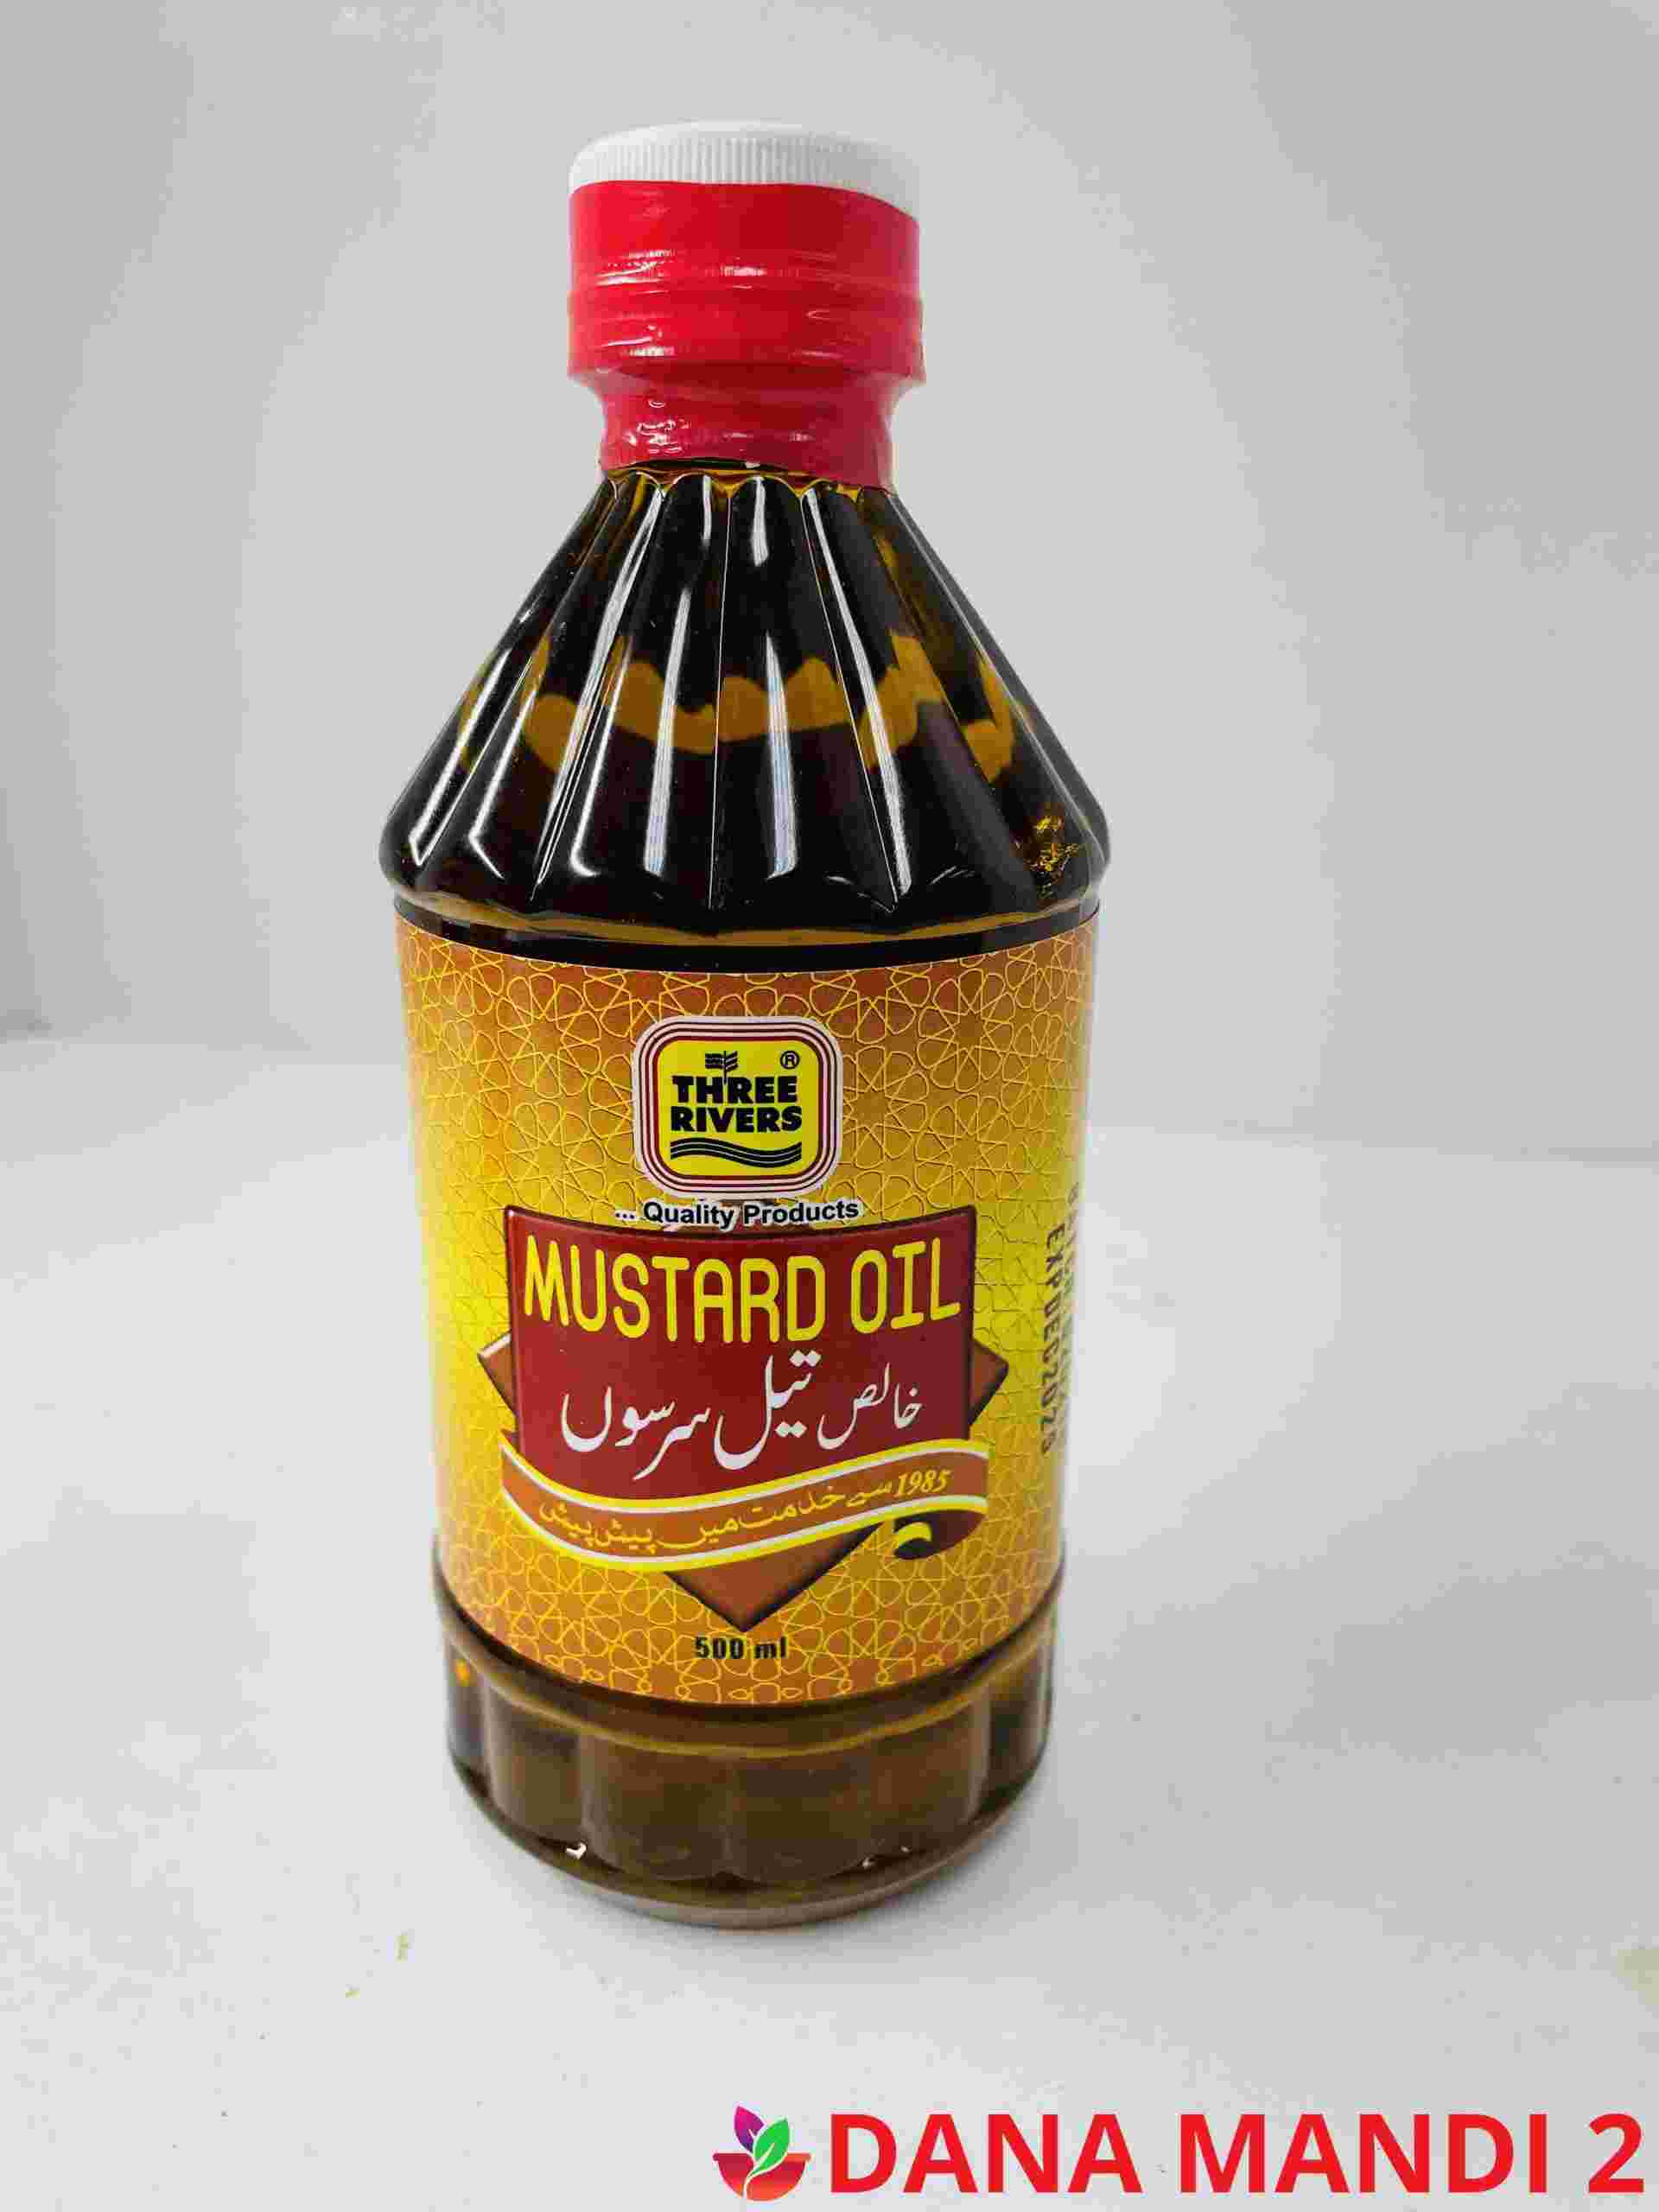 THREE RIVER Mustard Oil